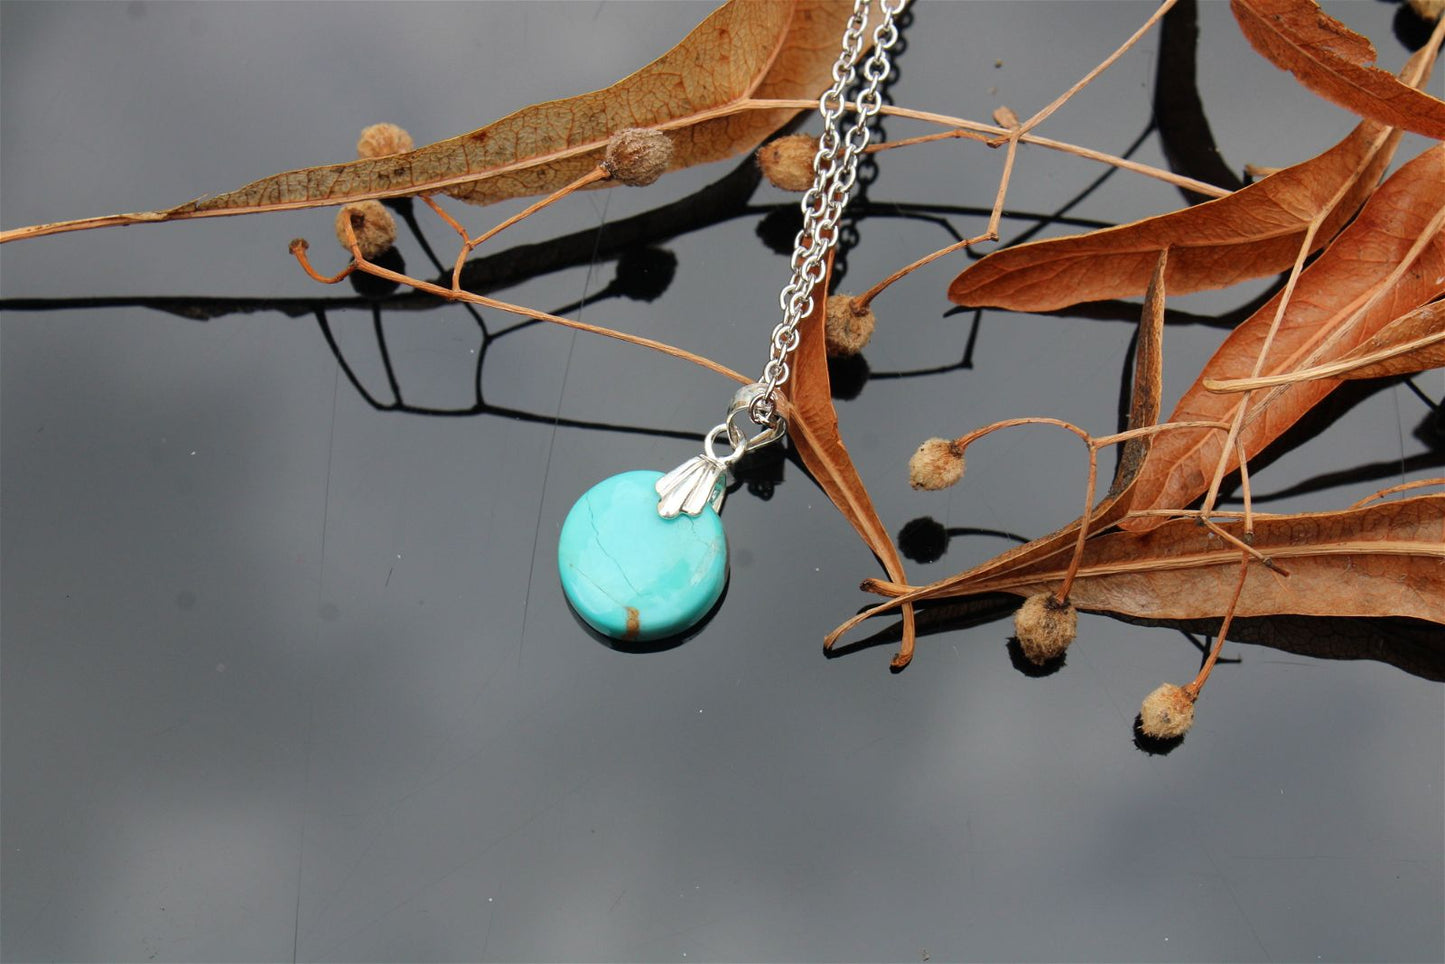 Collier turquoise RECONSTITUEE avec chaîne inox - Aurore Lune 